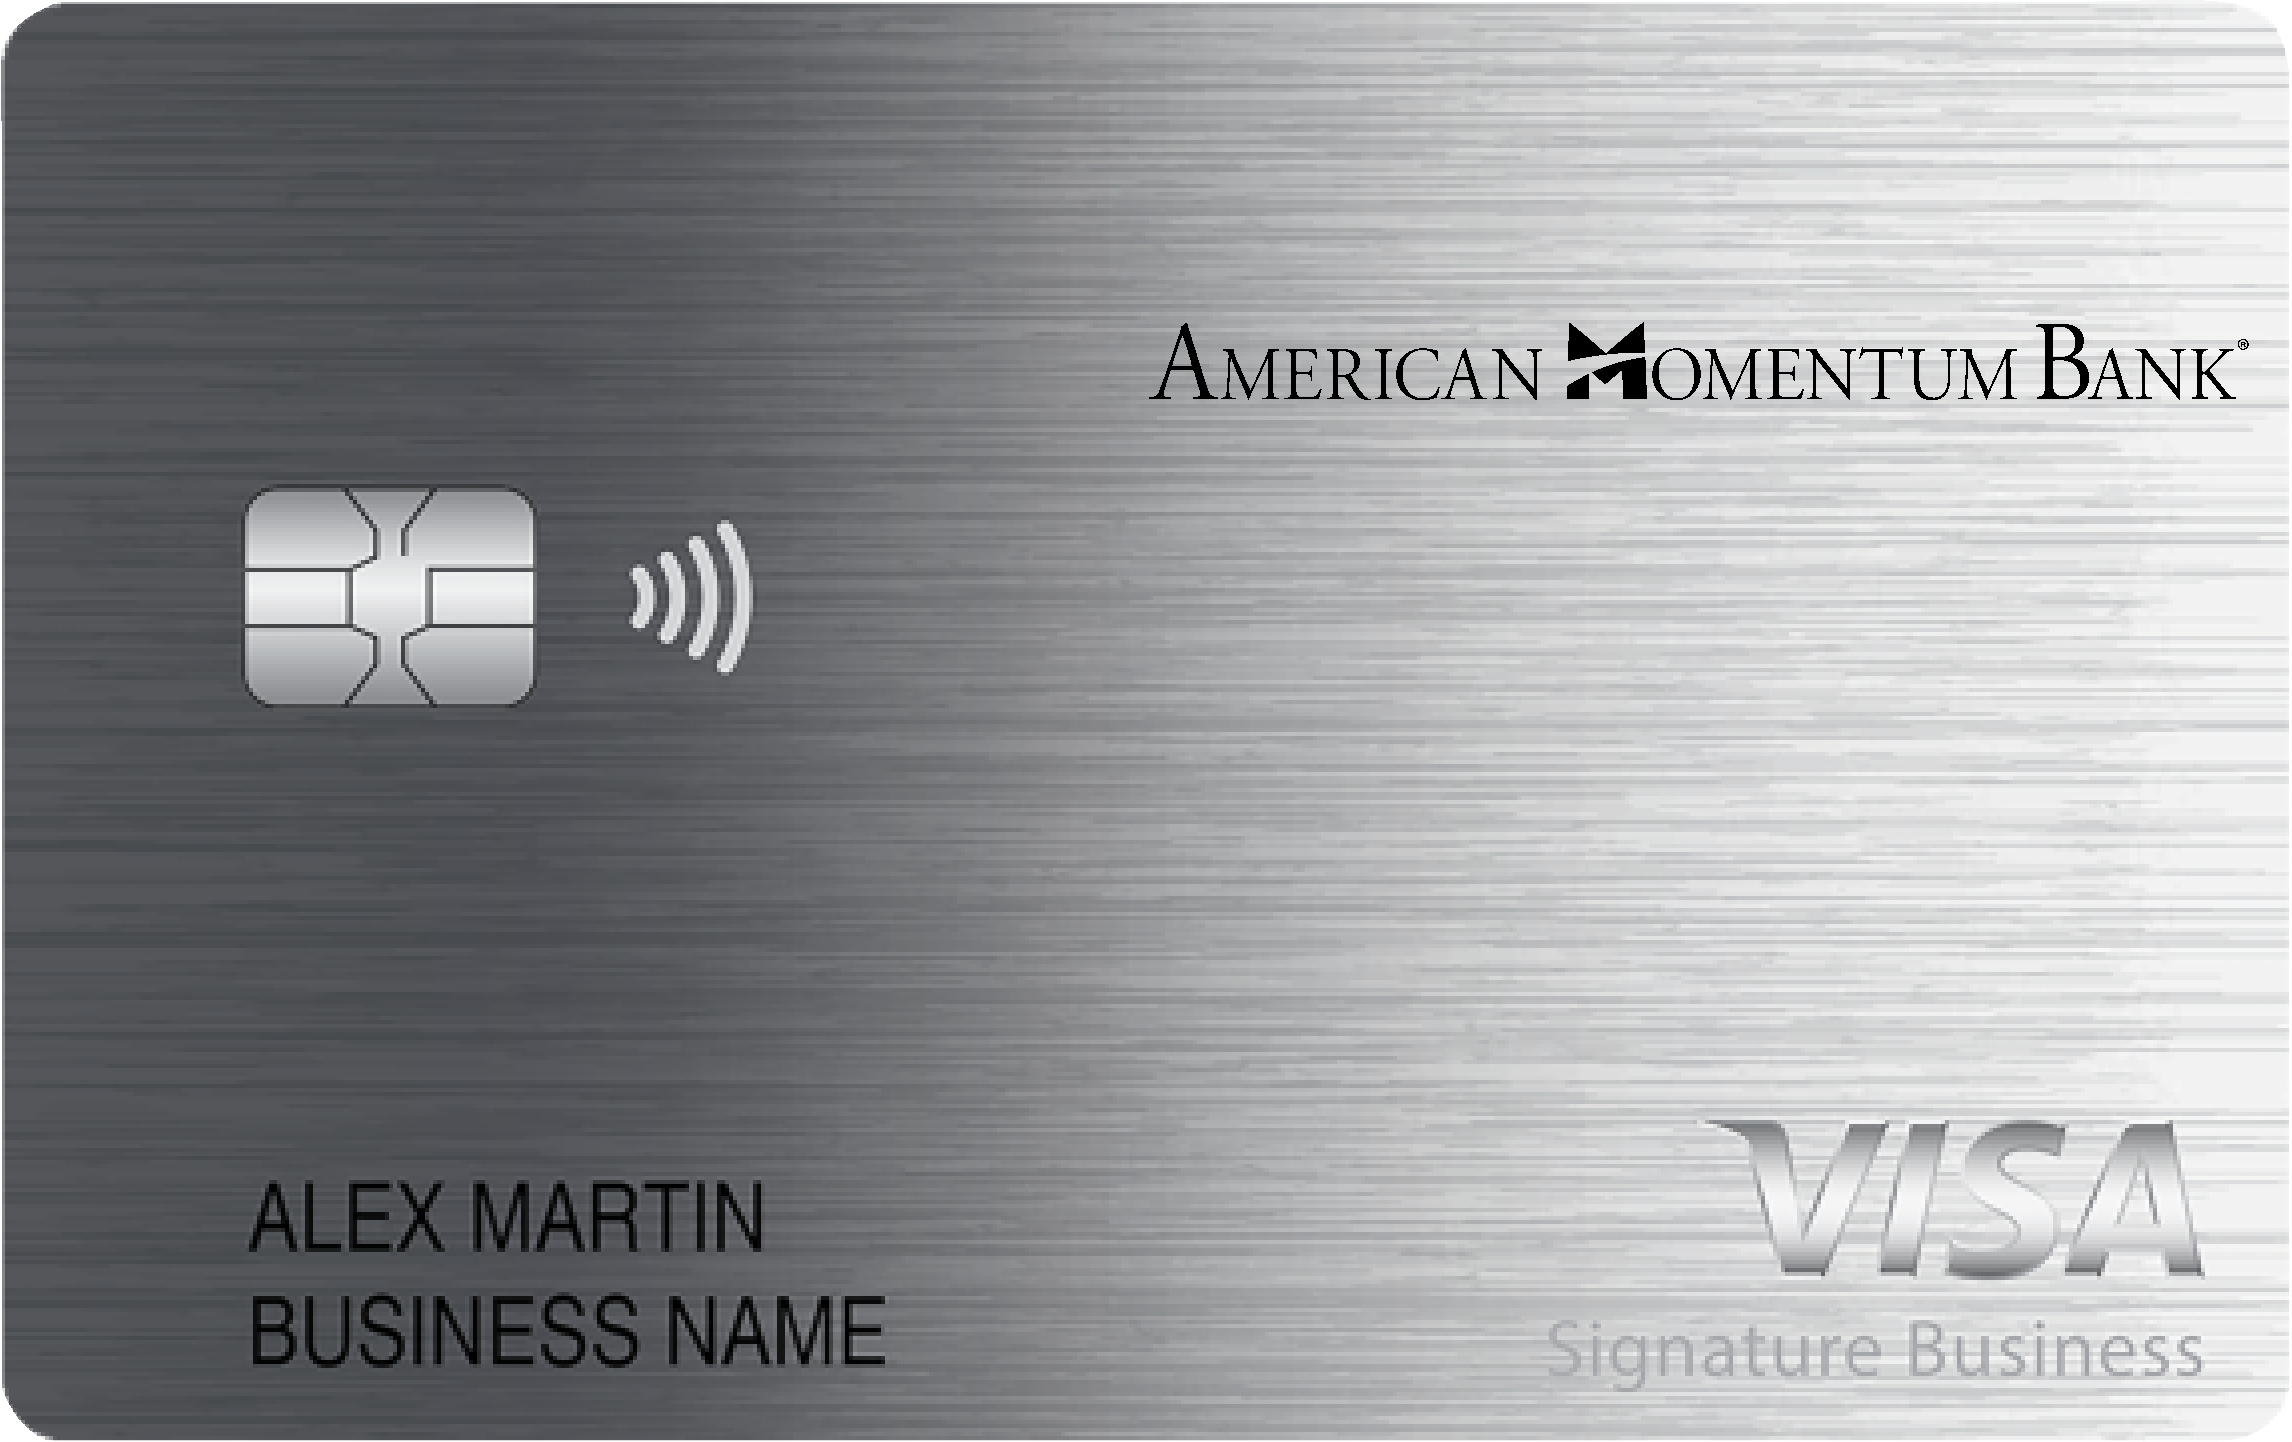 American Momentum Bank Smart Business Rewards Card